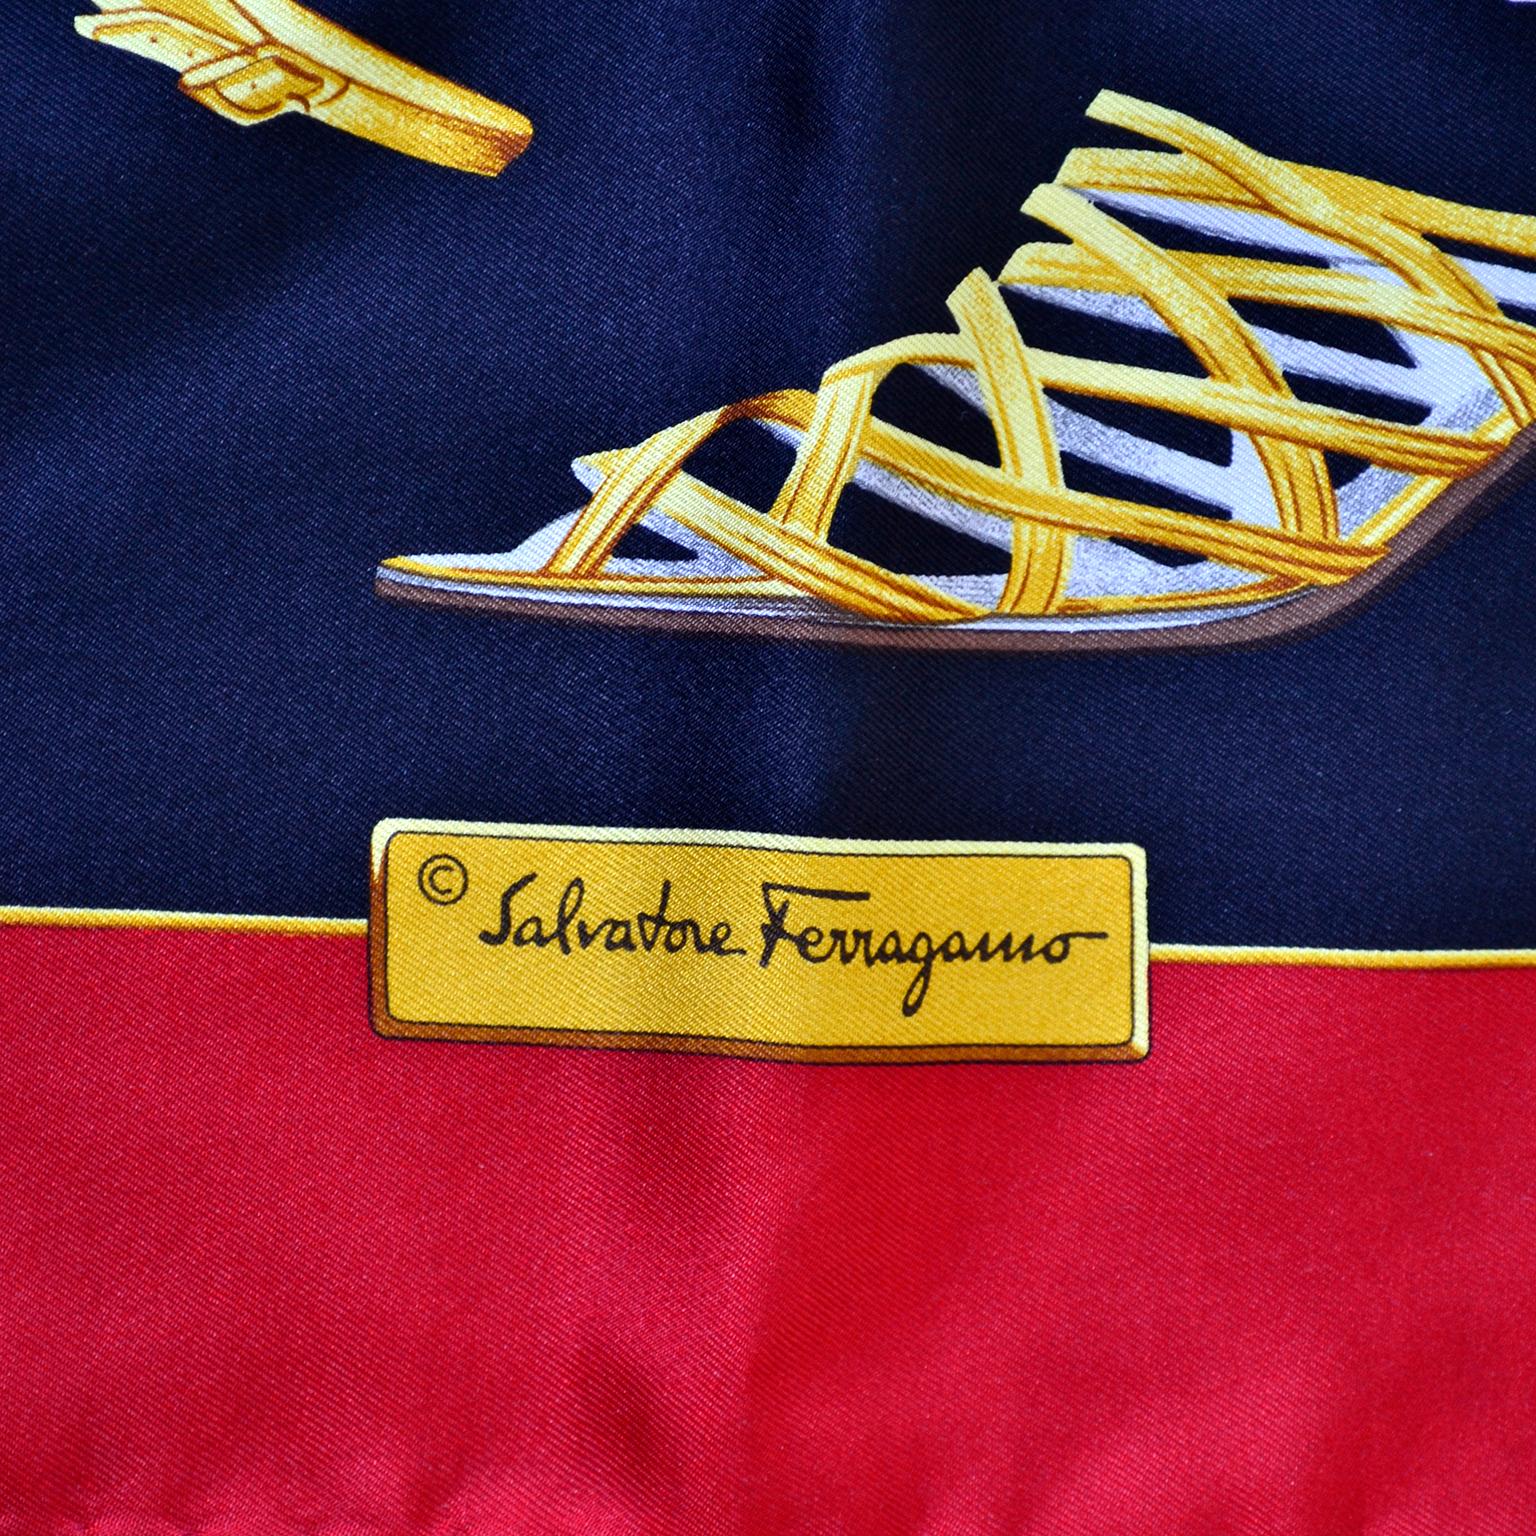 Salvatore Ferragamo Vintage Multi Colored Shoe Print Silk Scarf In Excellent Condition For Sale In Portland, OR